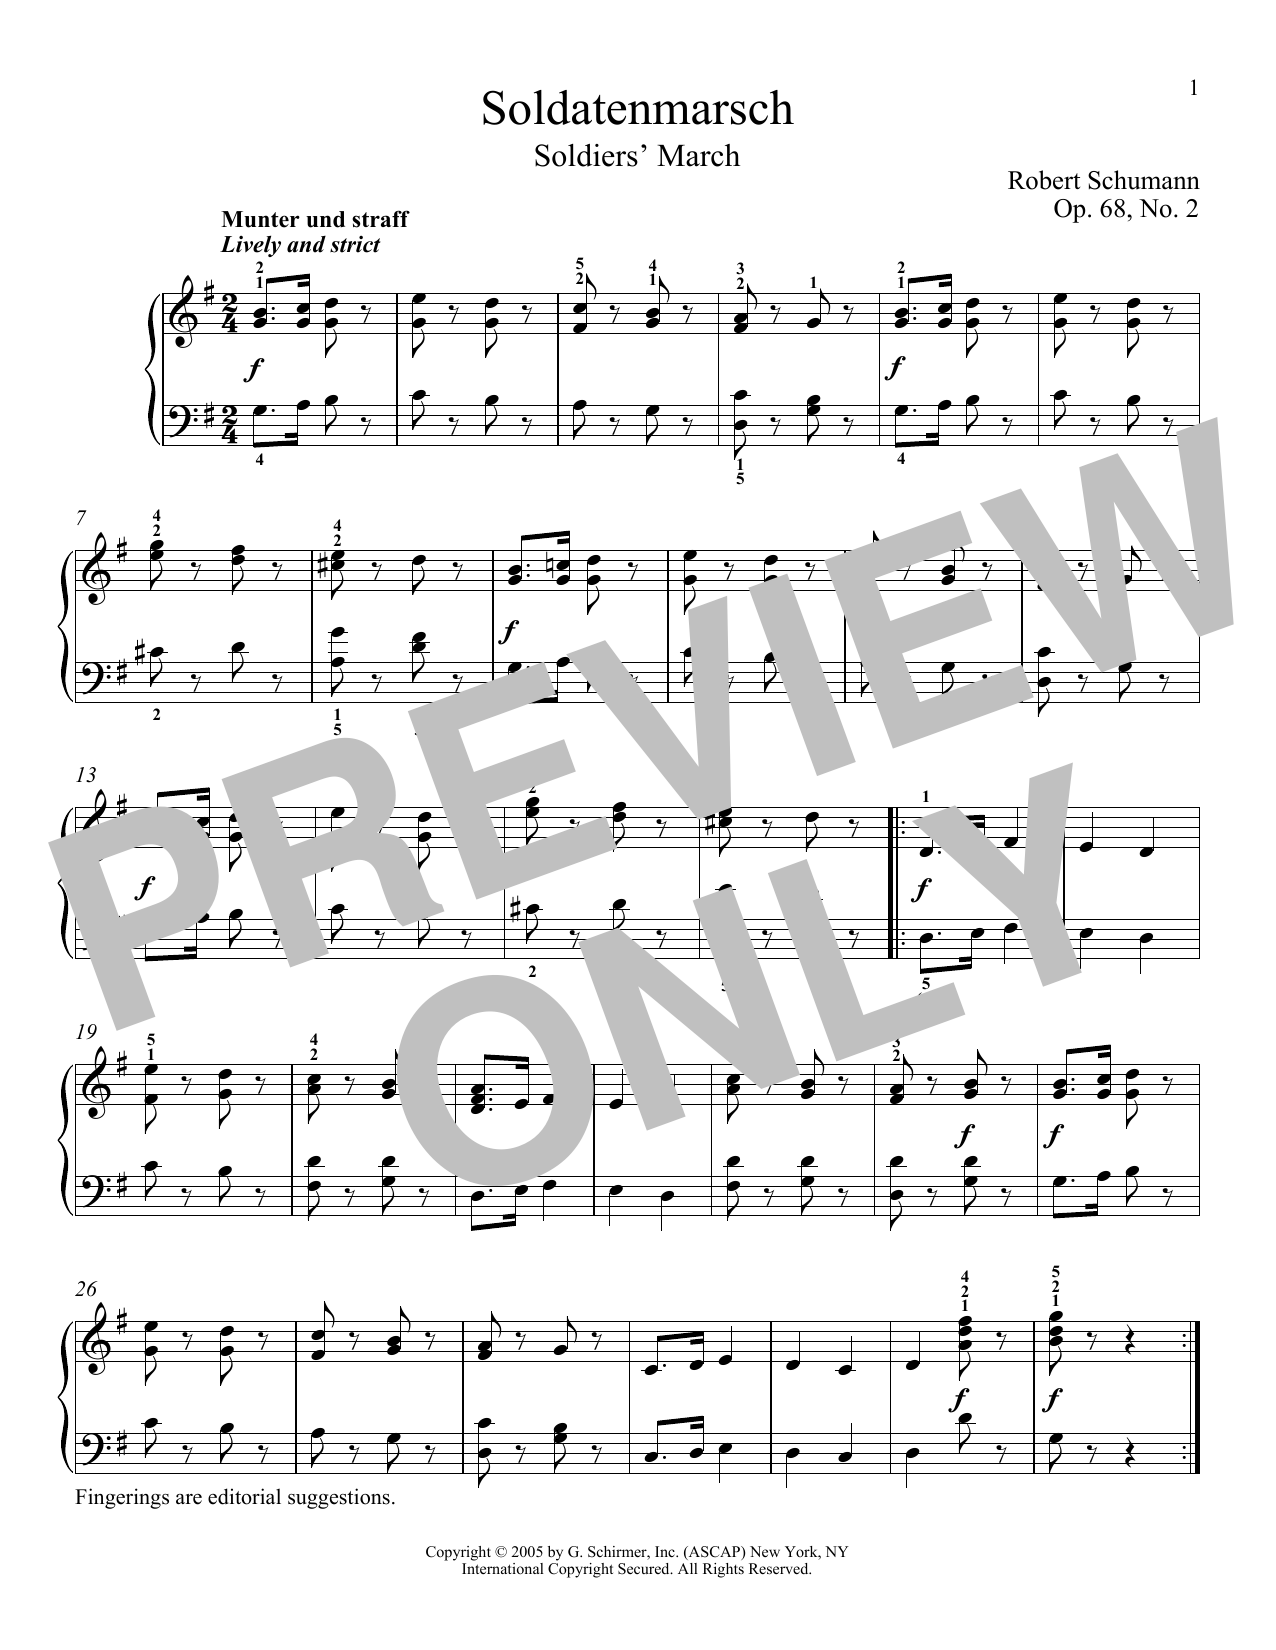 Robert Schumann Soldier's March (Soldatenmarsch), Op. 68, No. 2 Sheet Music Notes & Chords for Piano - Download or Print PDF